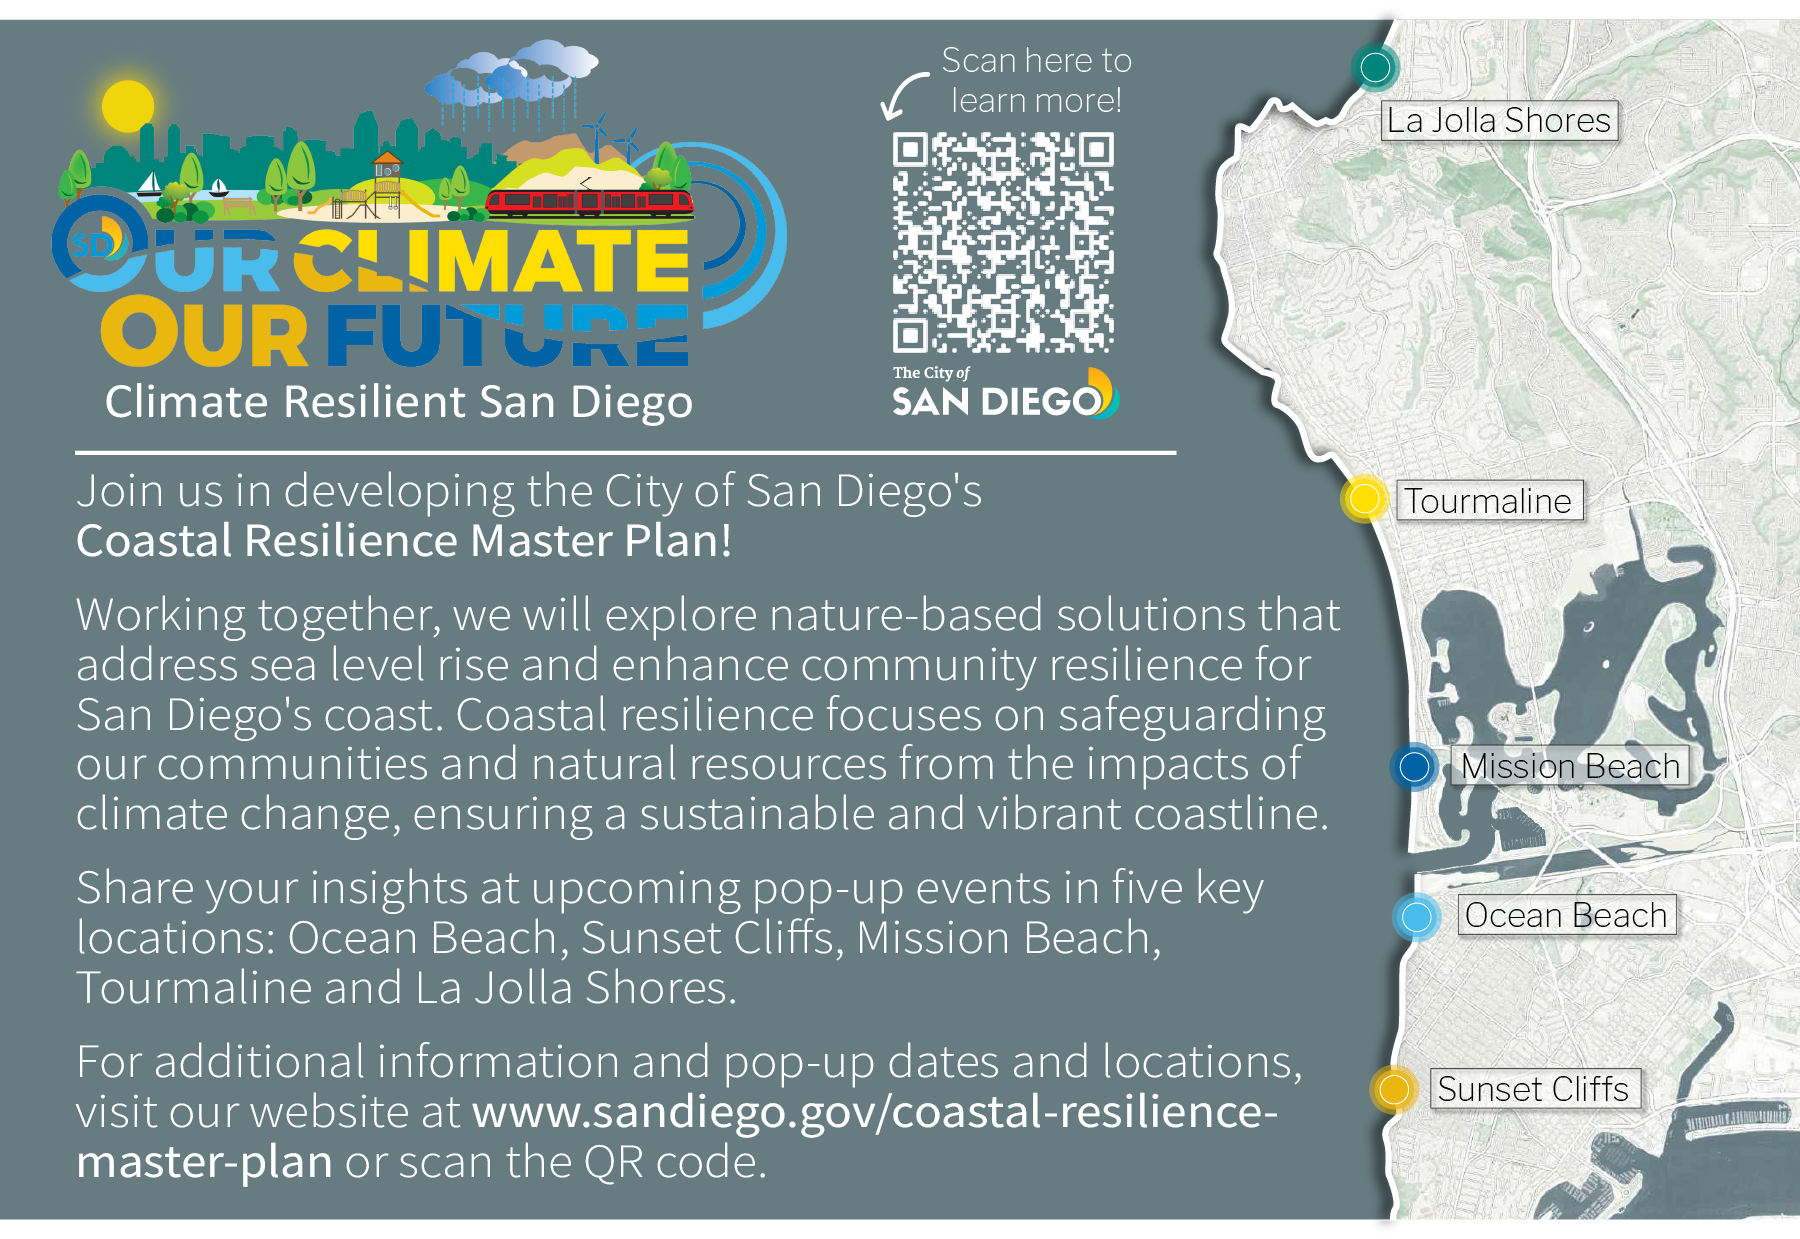 The Coastal Resilience Master Plan